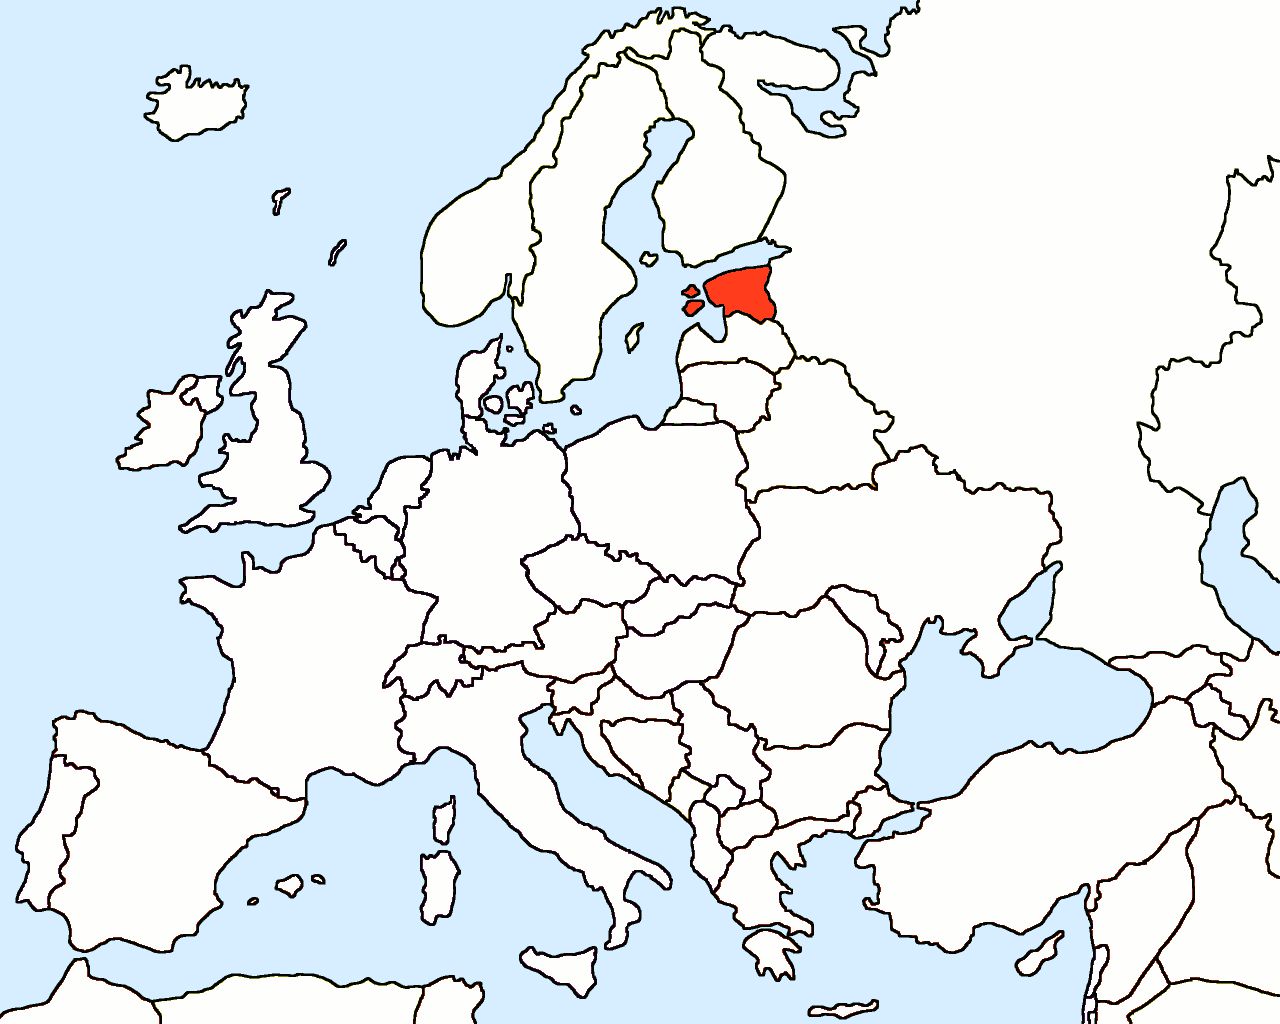 Estonia ing peta Eropah